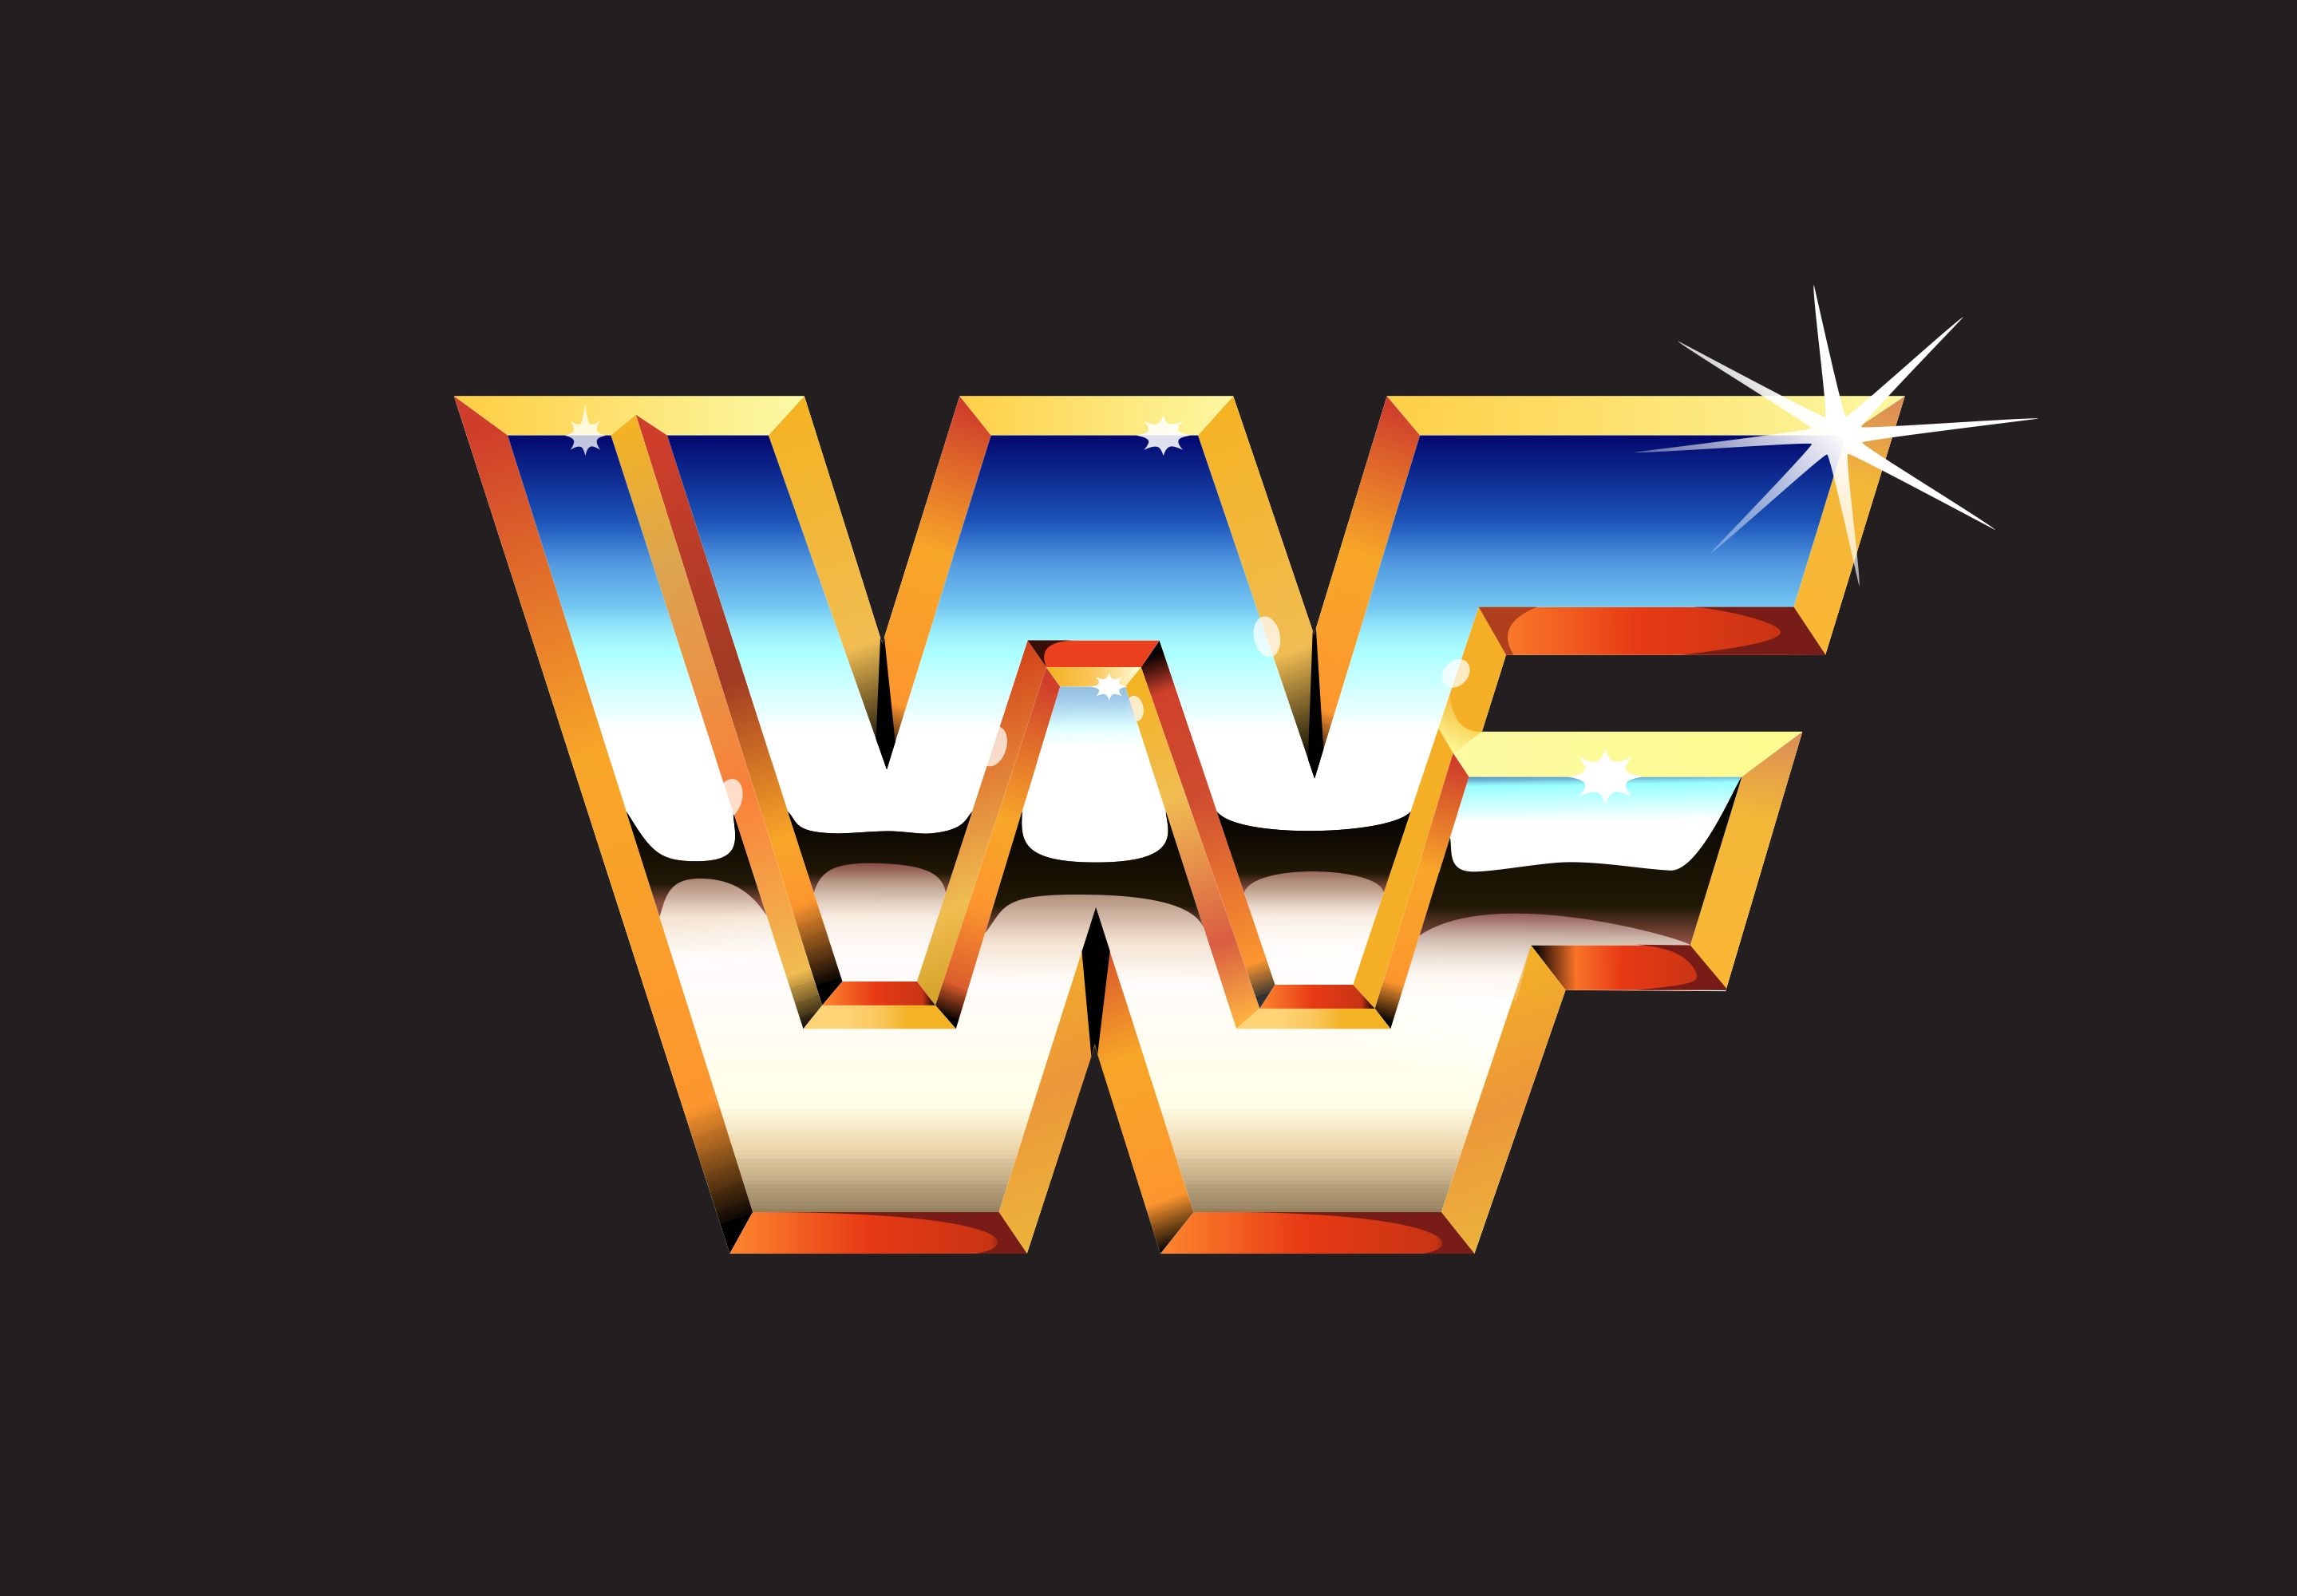 wwf wrestlers logo